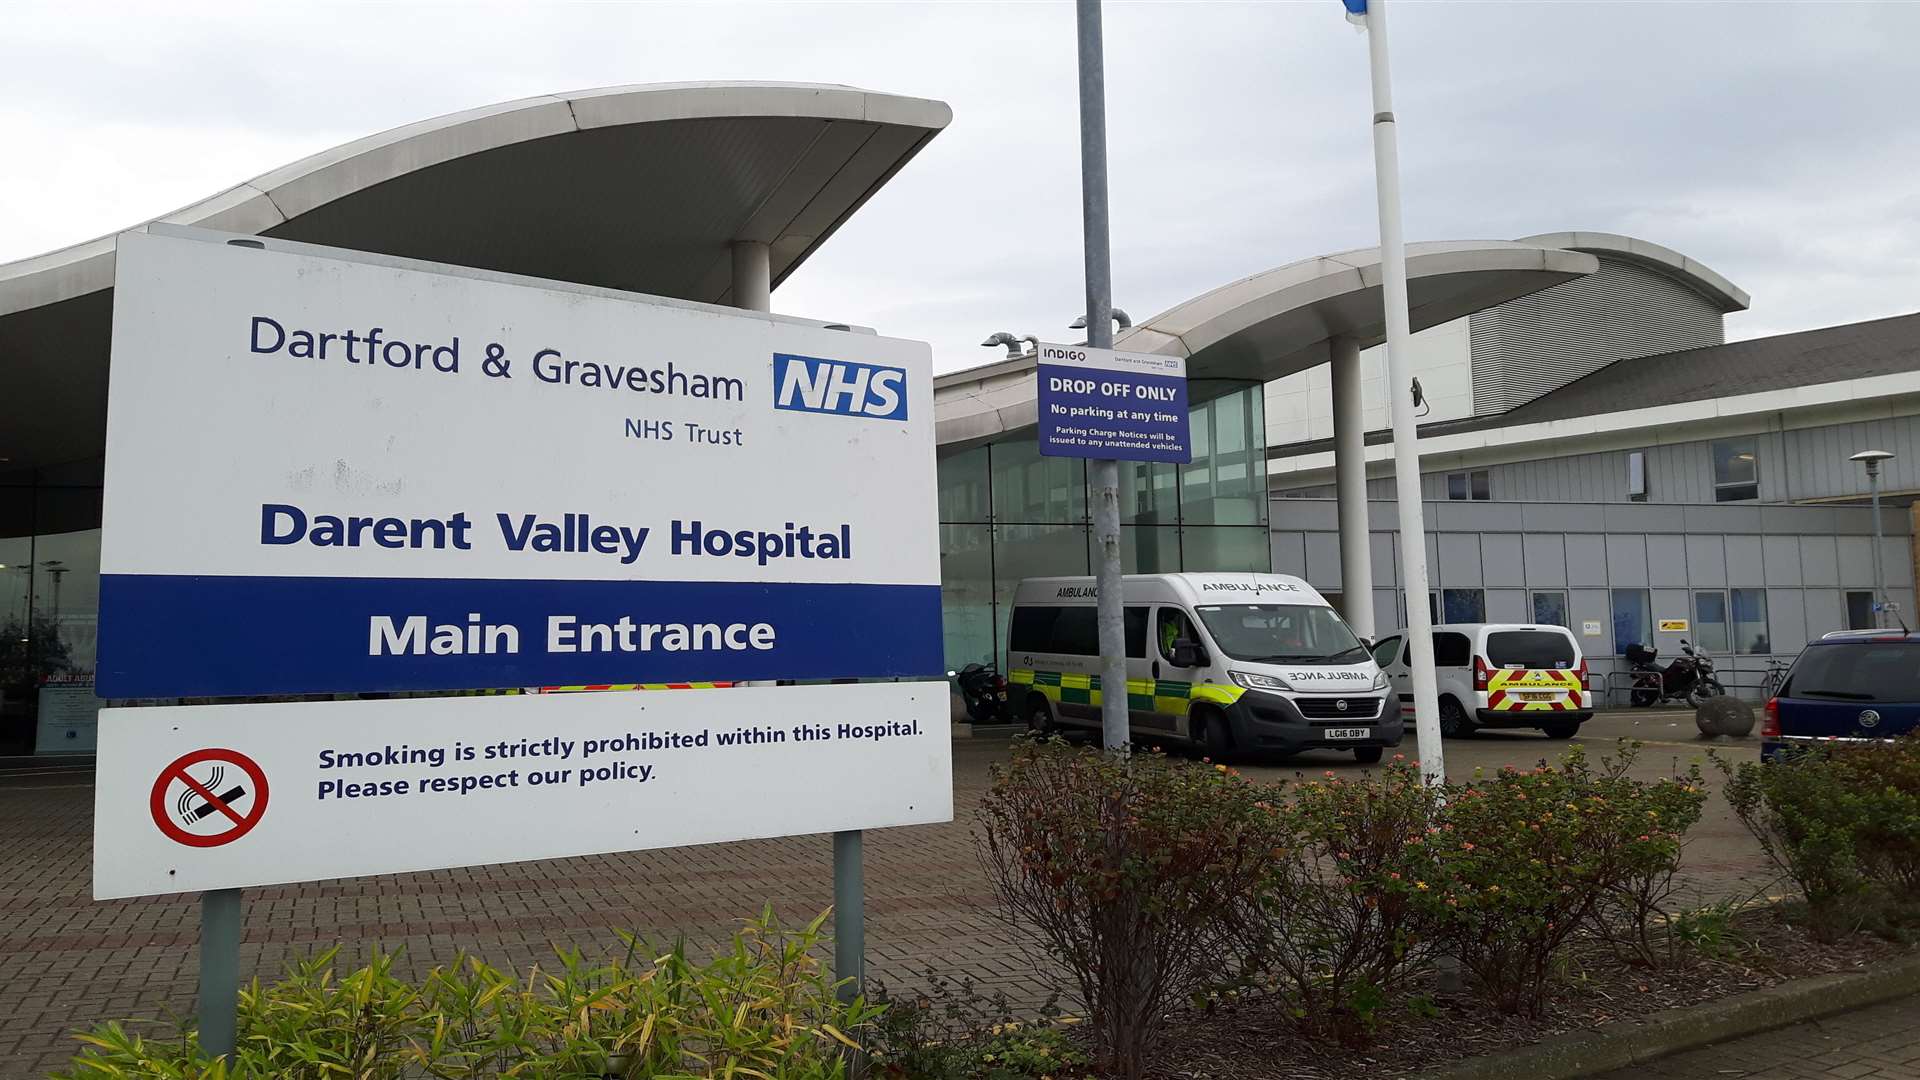 Carillion provided services at Darent Valley Hospital in Dartford